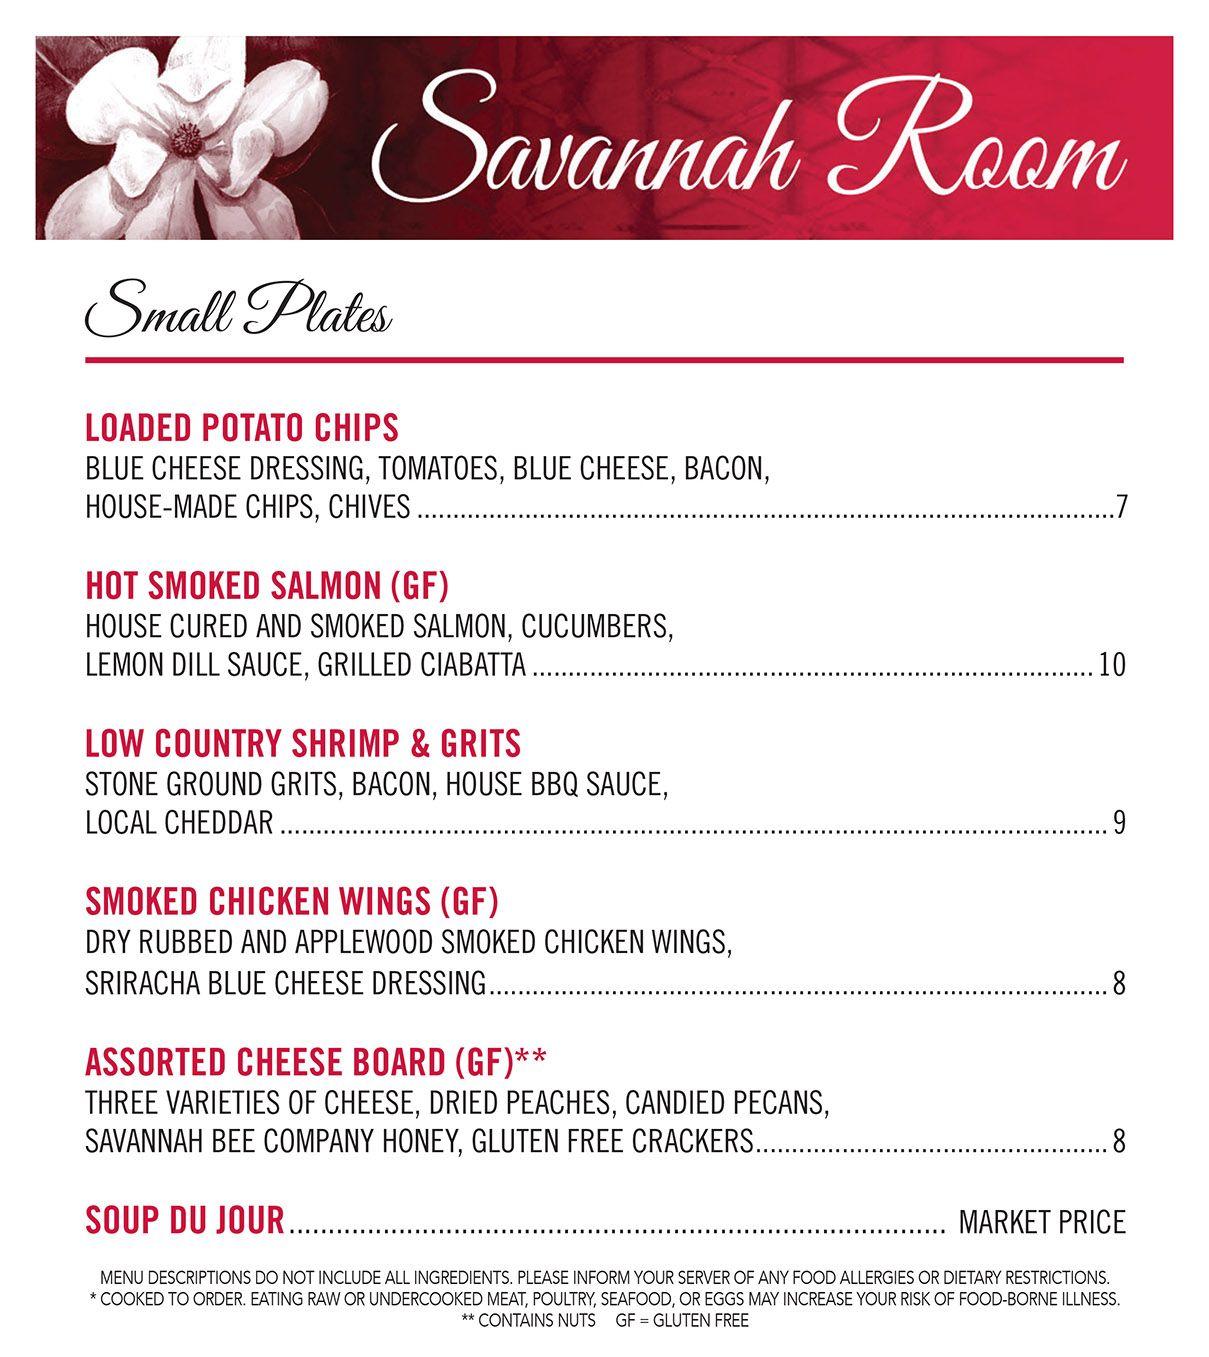 Terrell Red and Yellow Restaurant Logo - The Savannah Room at The UGA Hotel. Athens, GA Restaurants